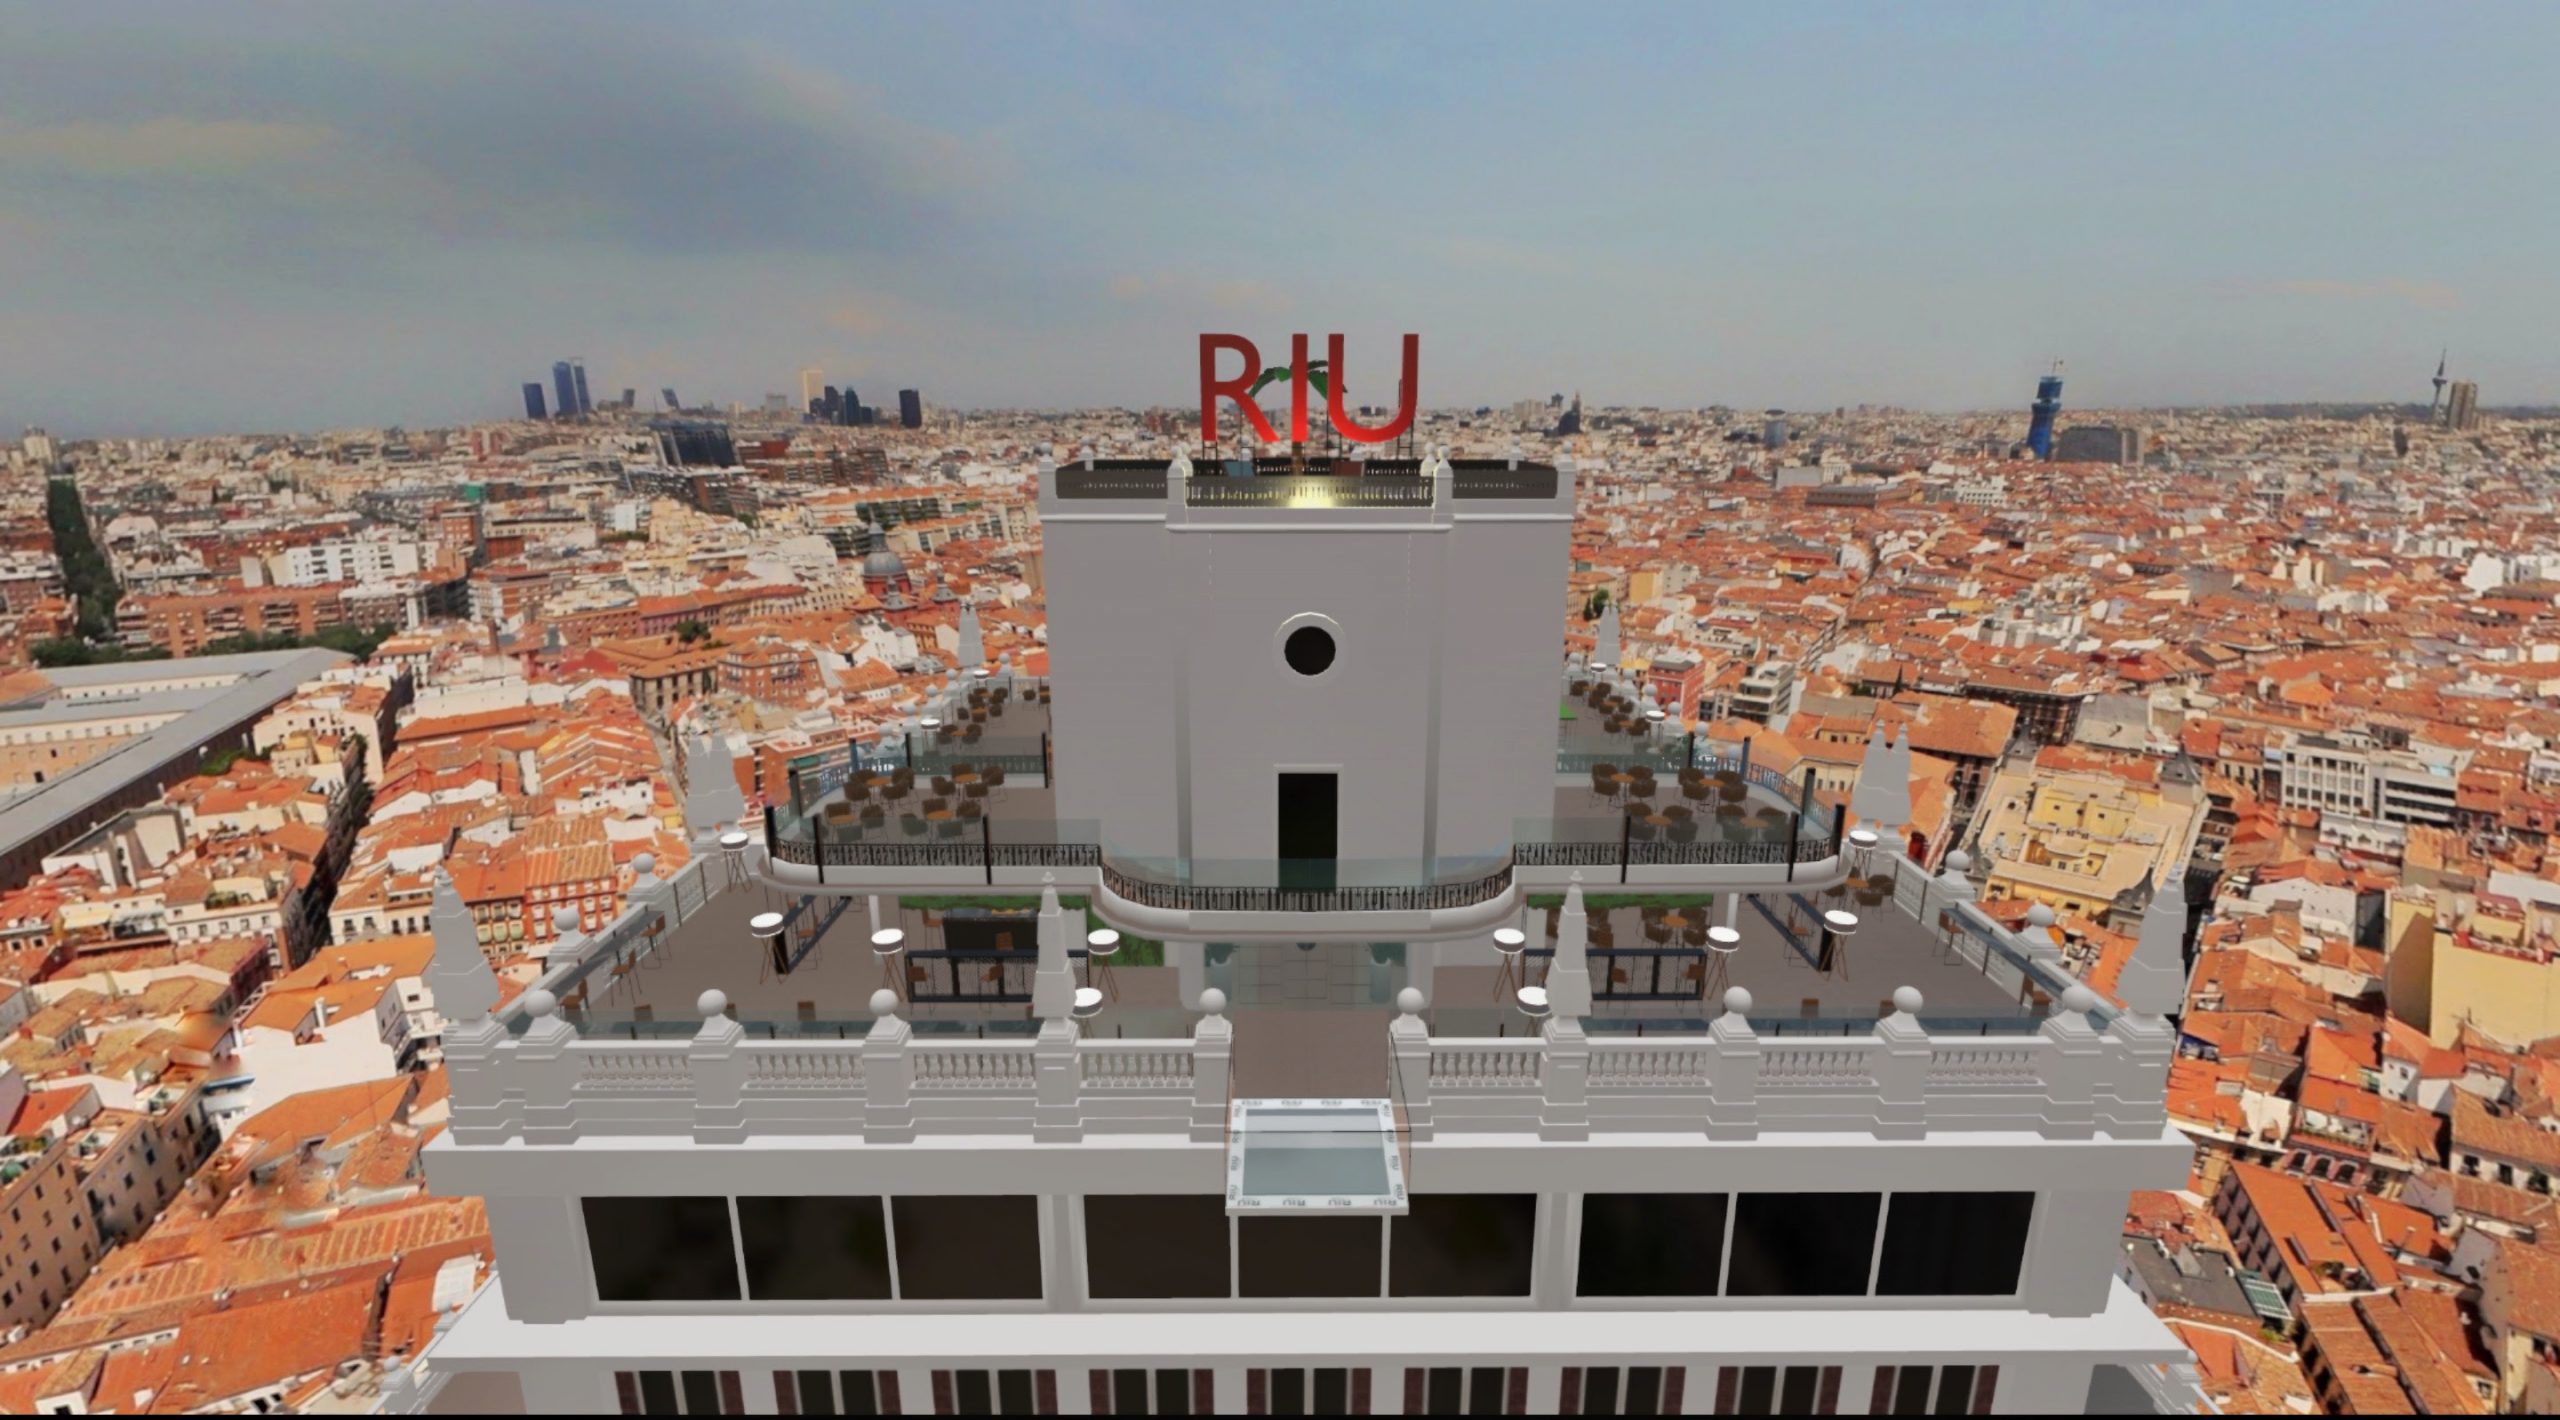 Das Hotel Riu Plaza España im Metaversum